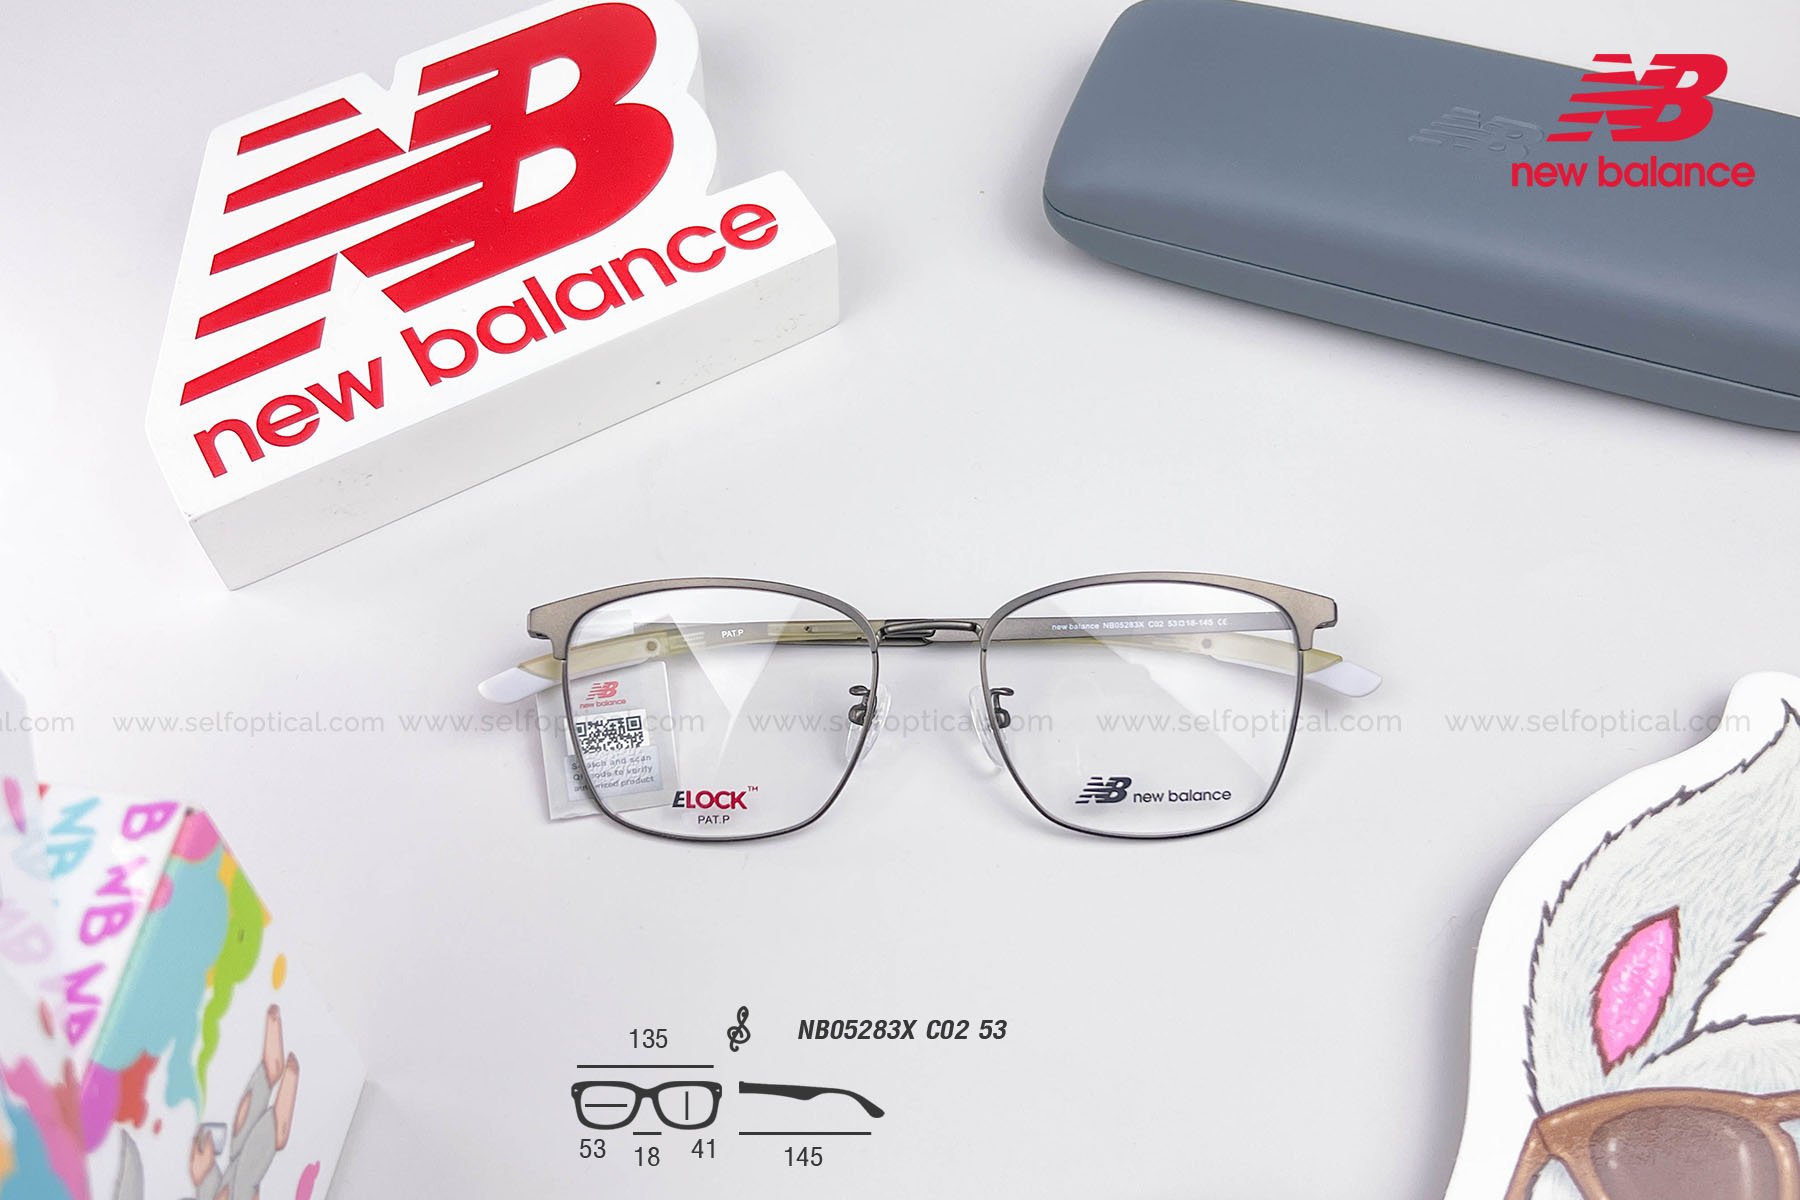 New Balance ELOCK NB05283X C02 53